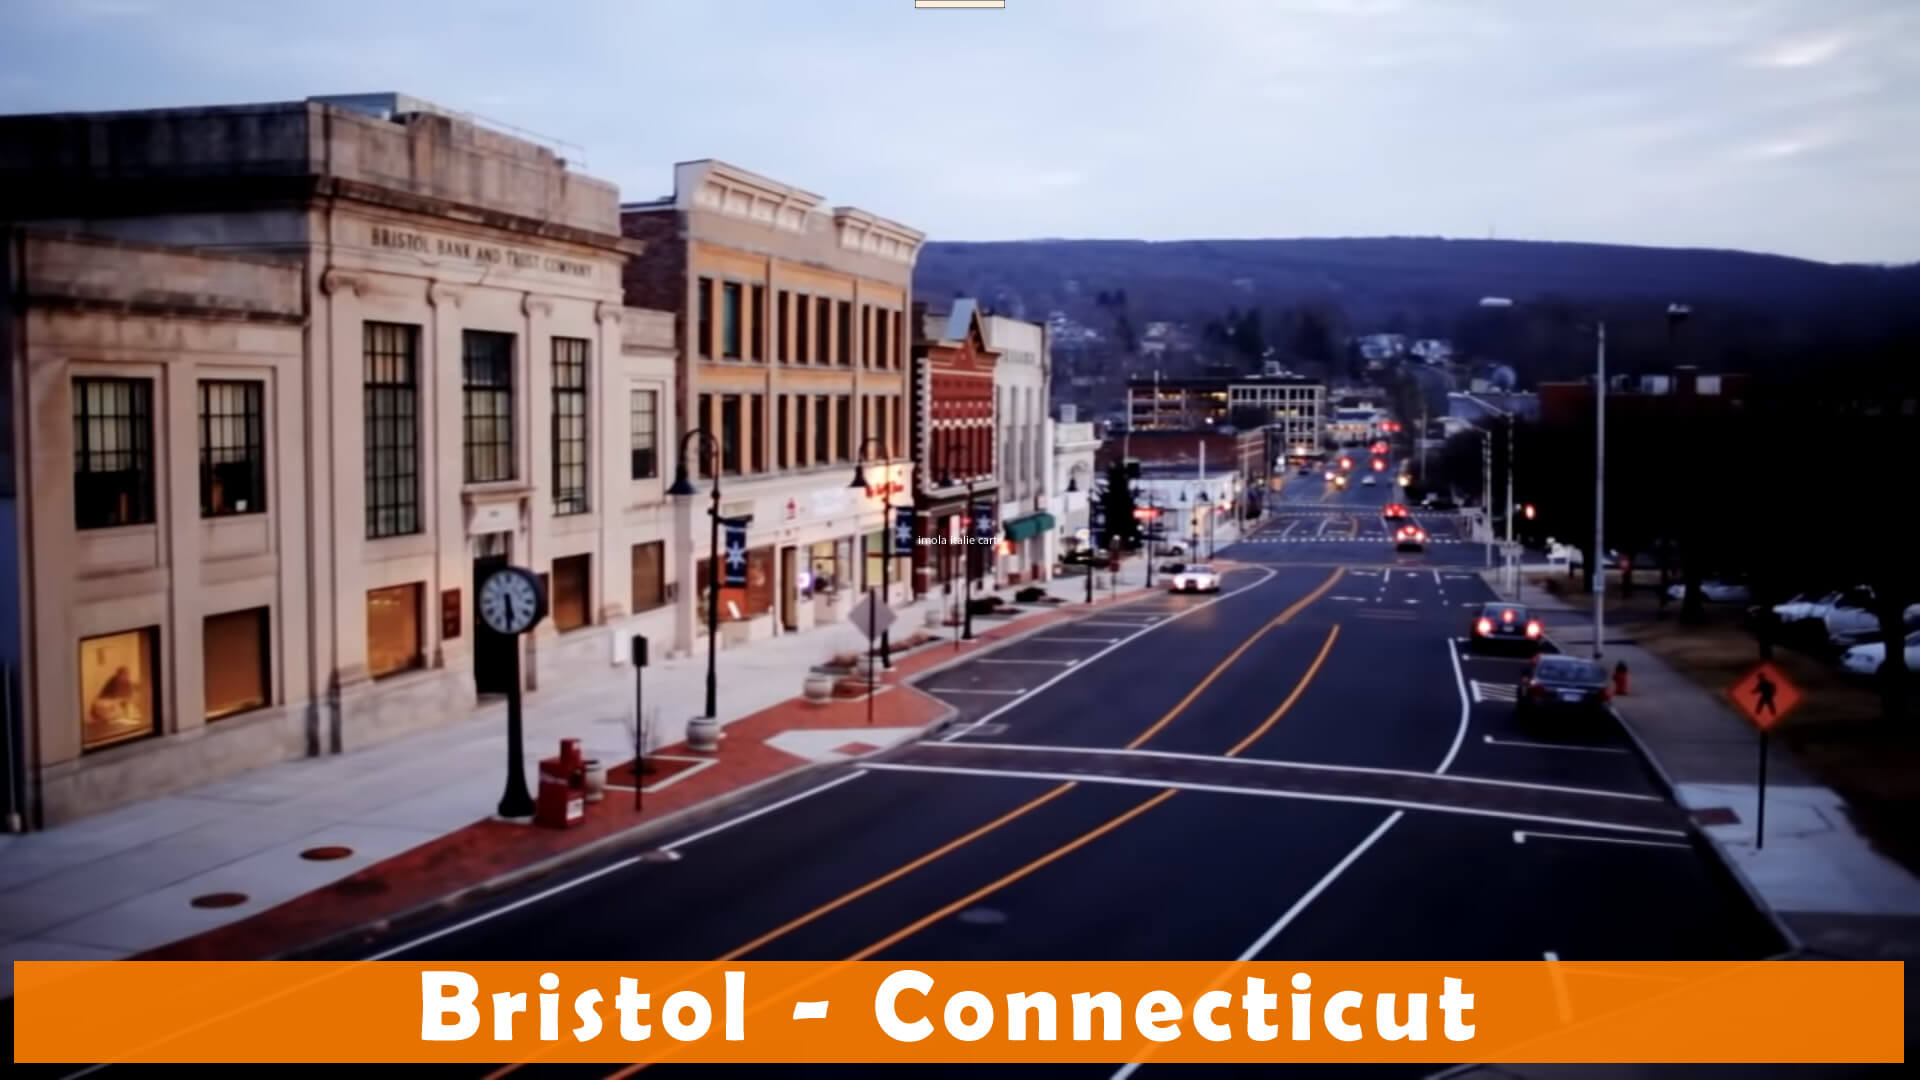 Bristol Connecticut